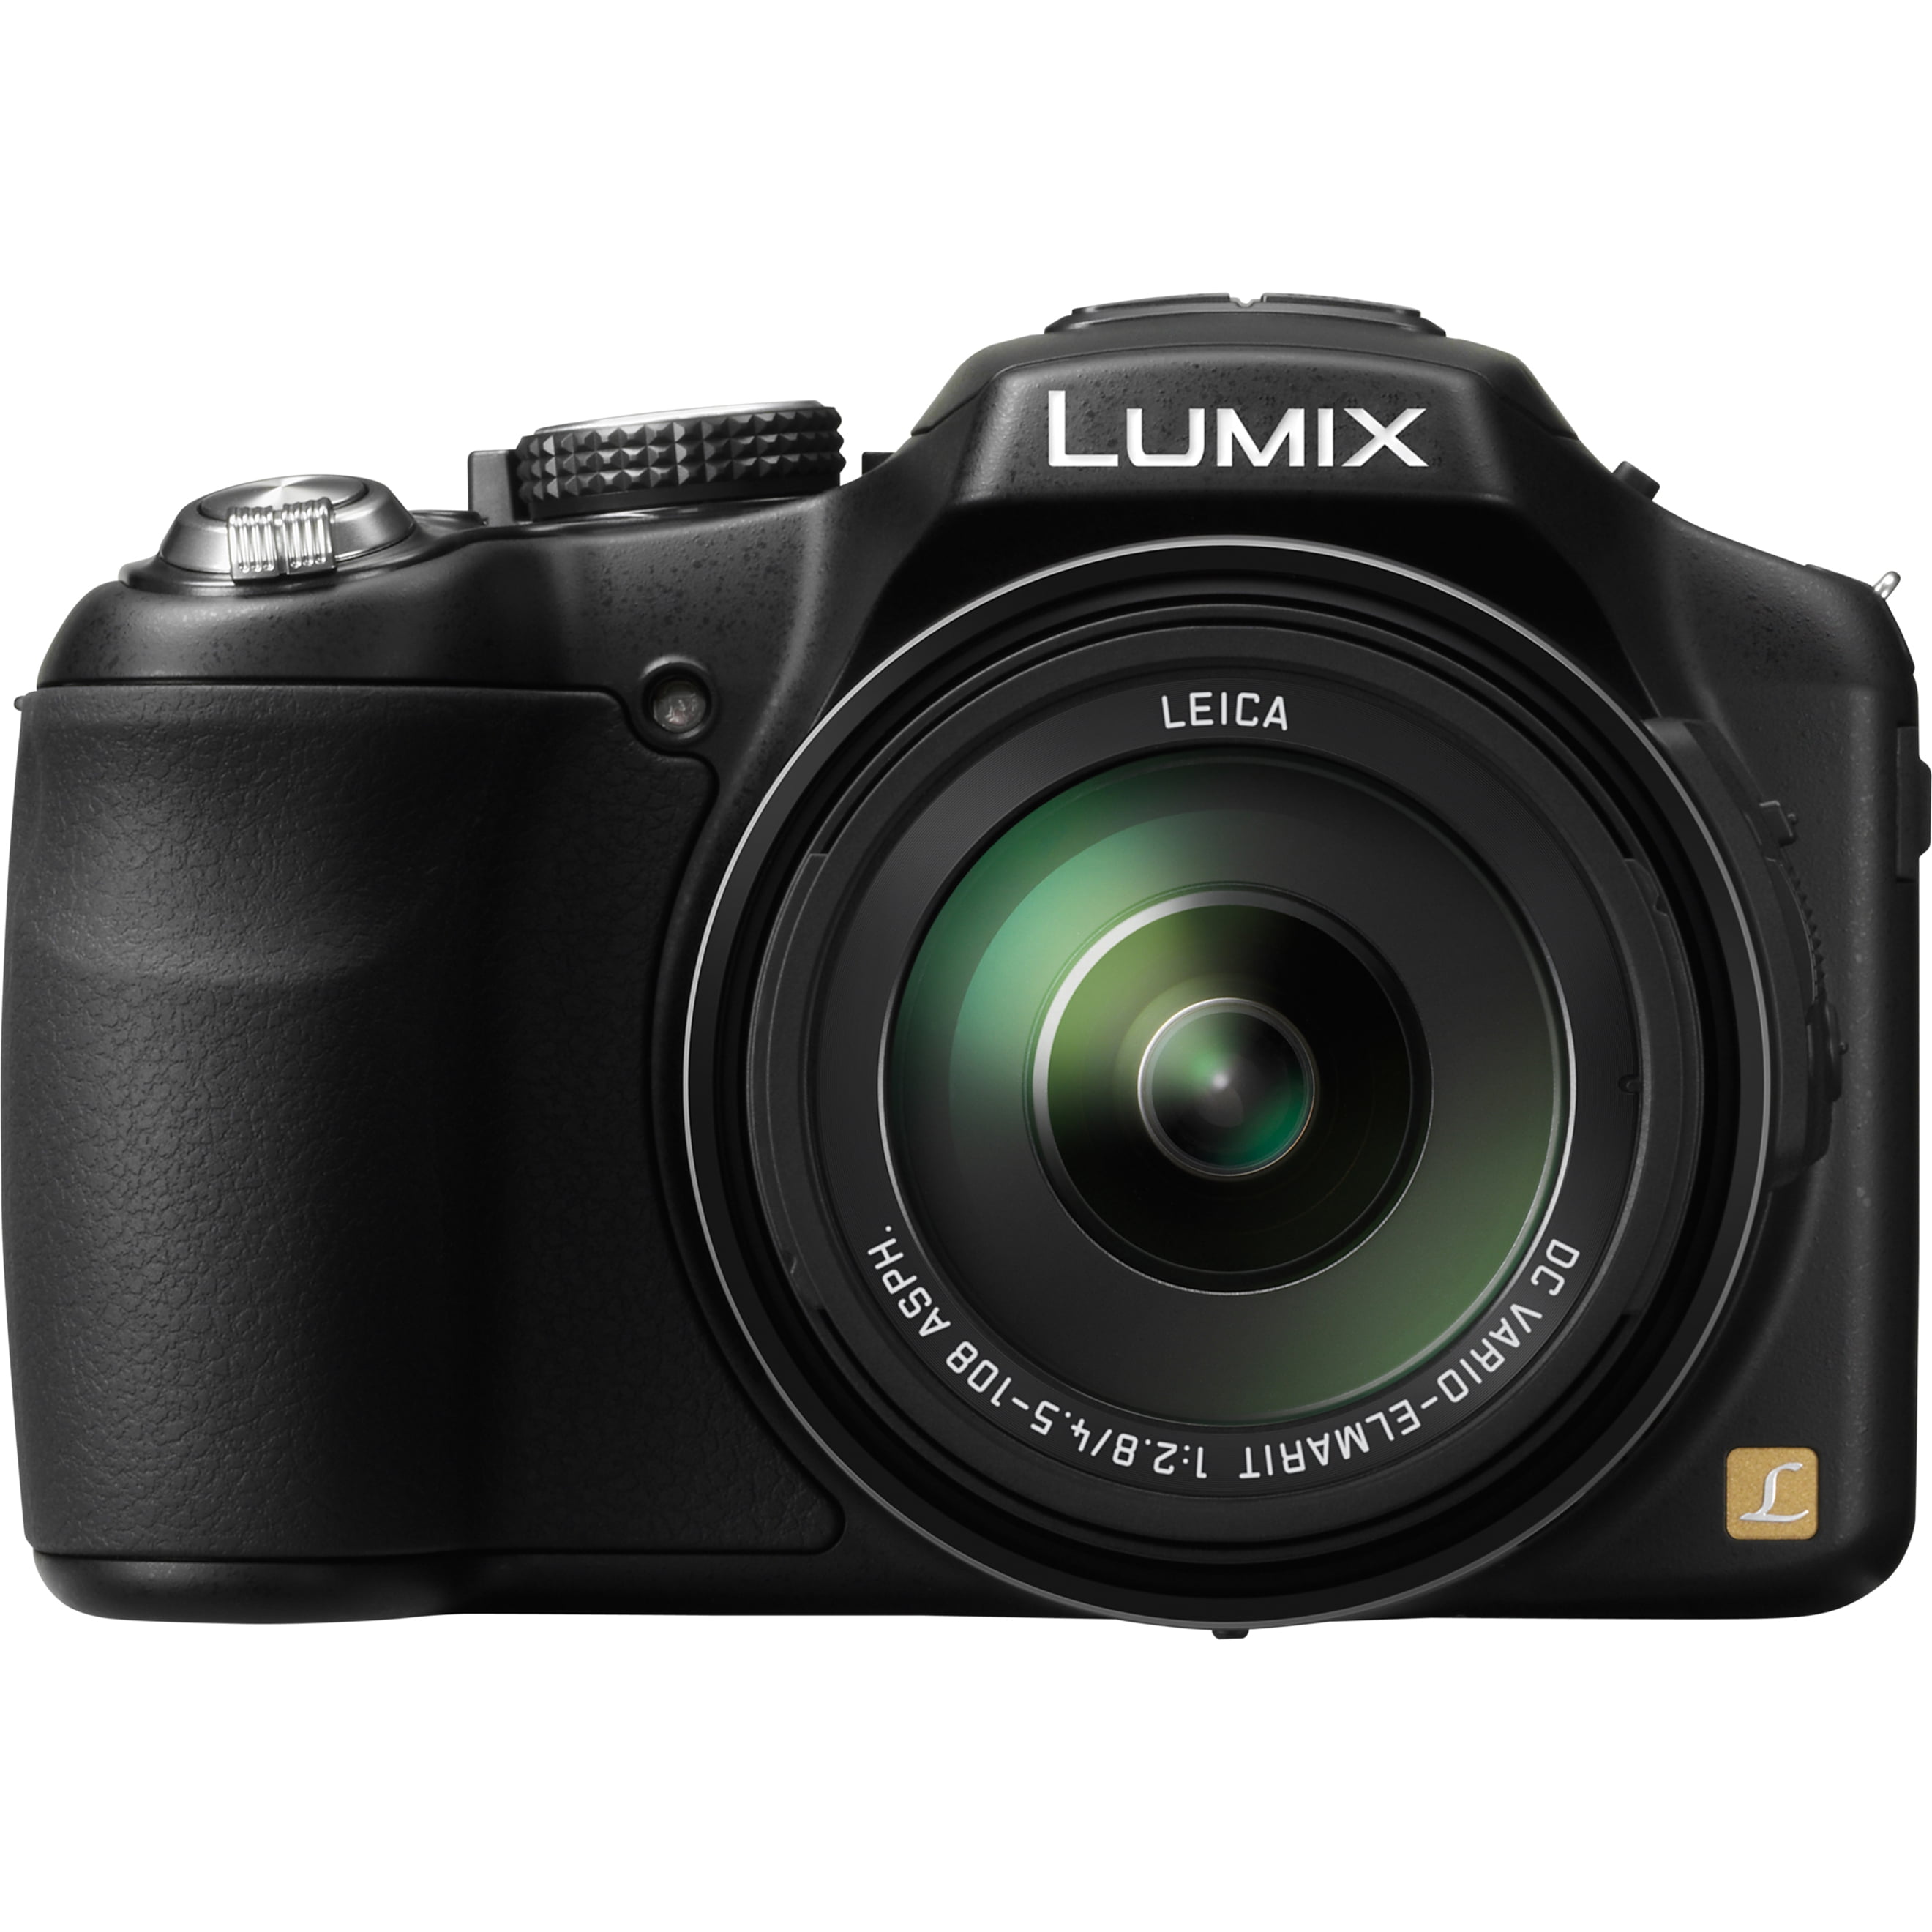 Verstrikking Wonderbaarlijk af hebben Panasonic Lumix DMC-FZ200 12.1 Megapixel Bridge Camera, Black - Walmart.com